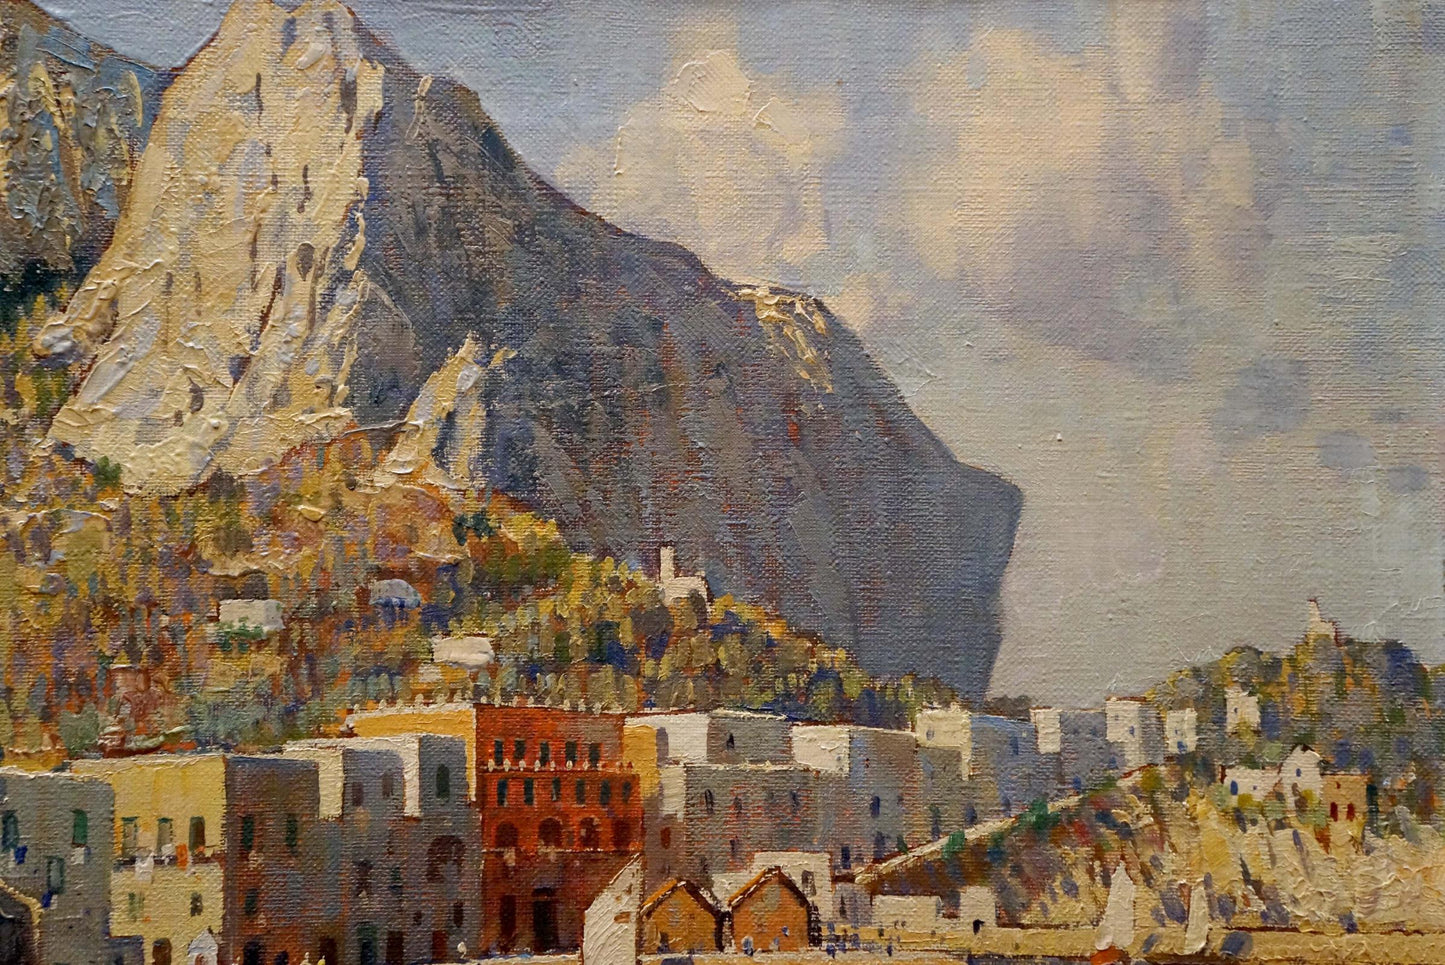 Oil painting Ischia maybe Felice Giordano